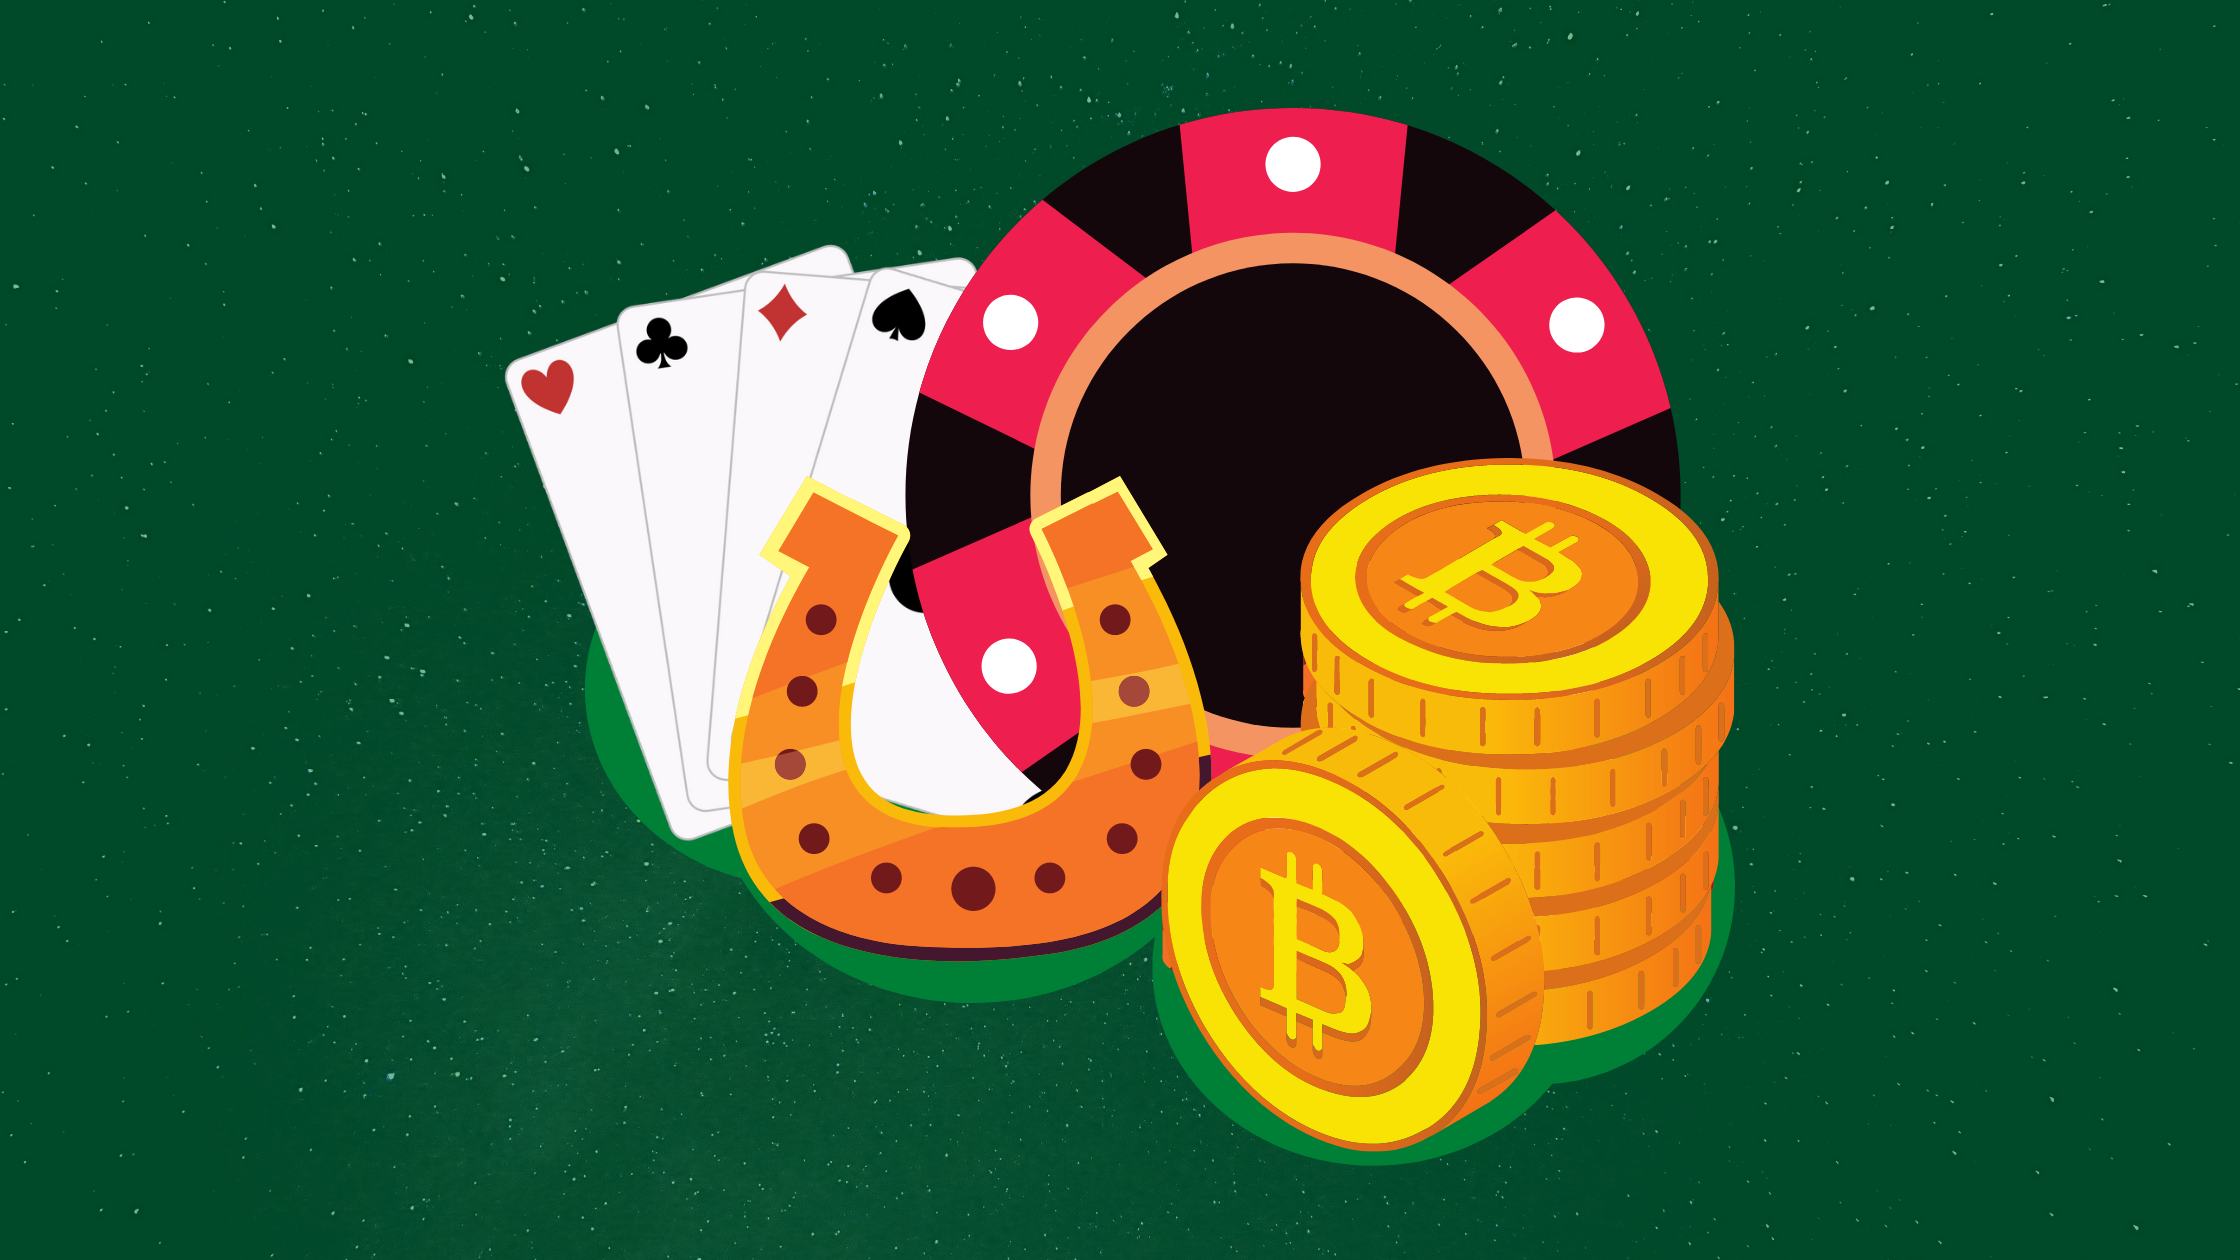 bitcoin gambling